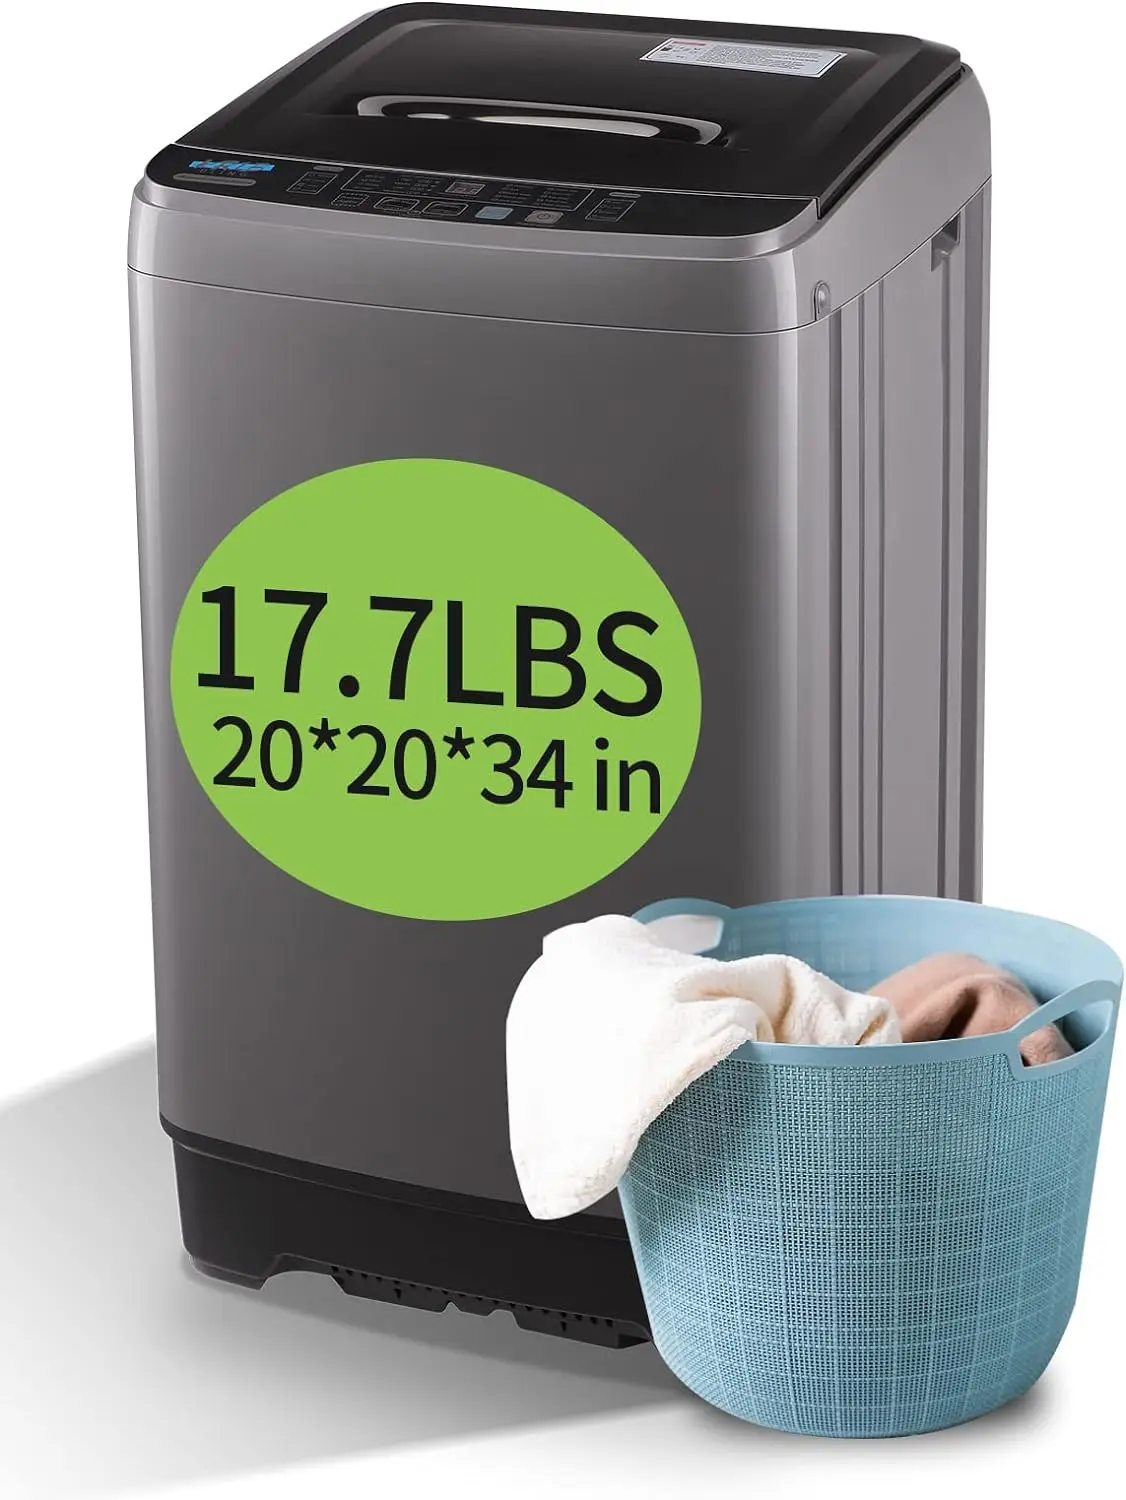 Omatic washing machine with led display 17 7 lbs portable washer drain pump 10 programs thumb200